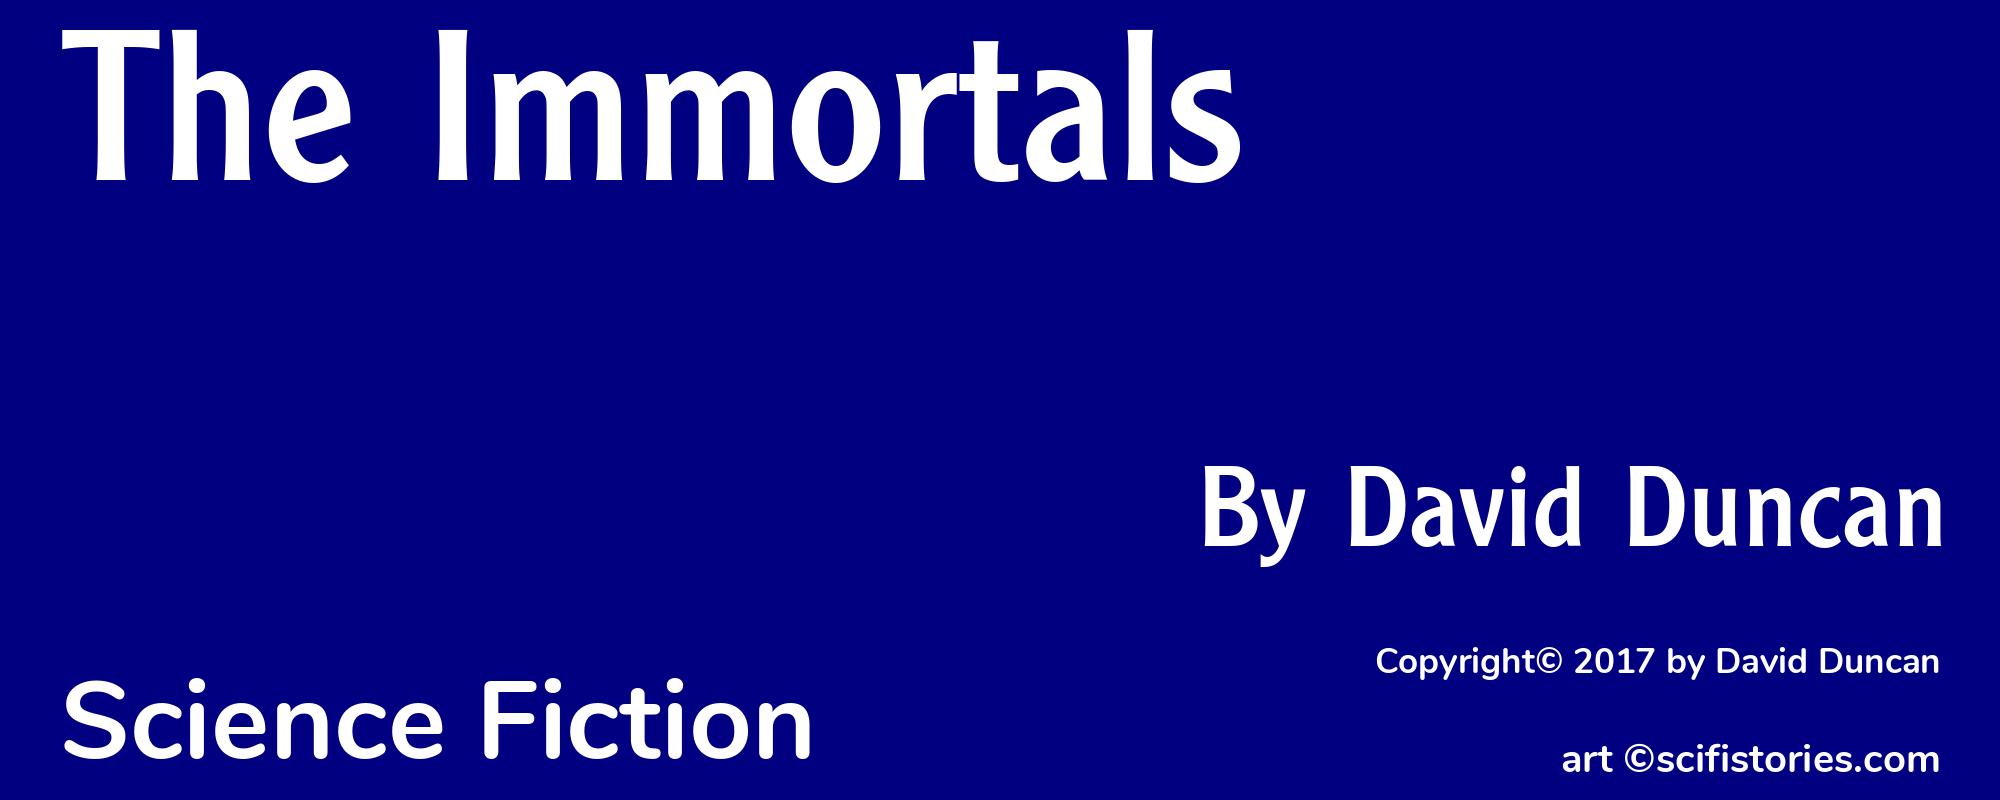 The Immortals - Cover